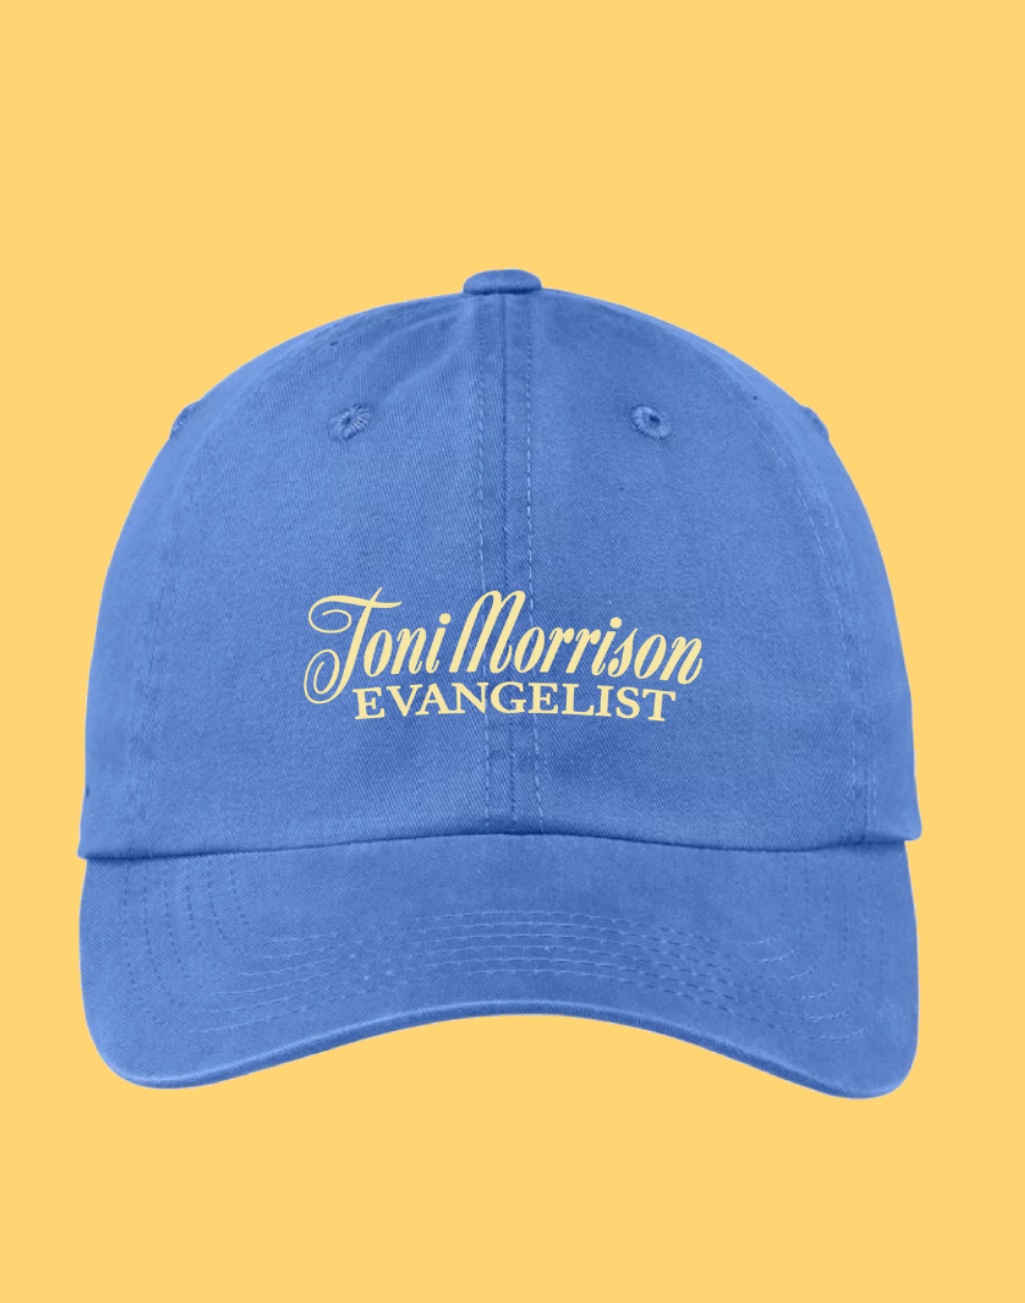 A blue baseball cap that says "Toni Morrison Evangelist